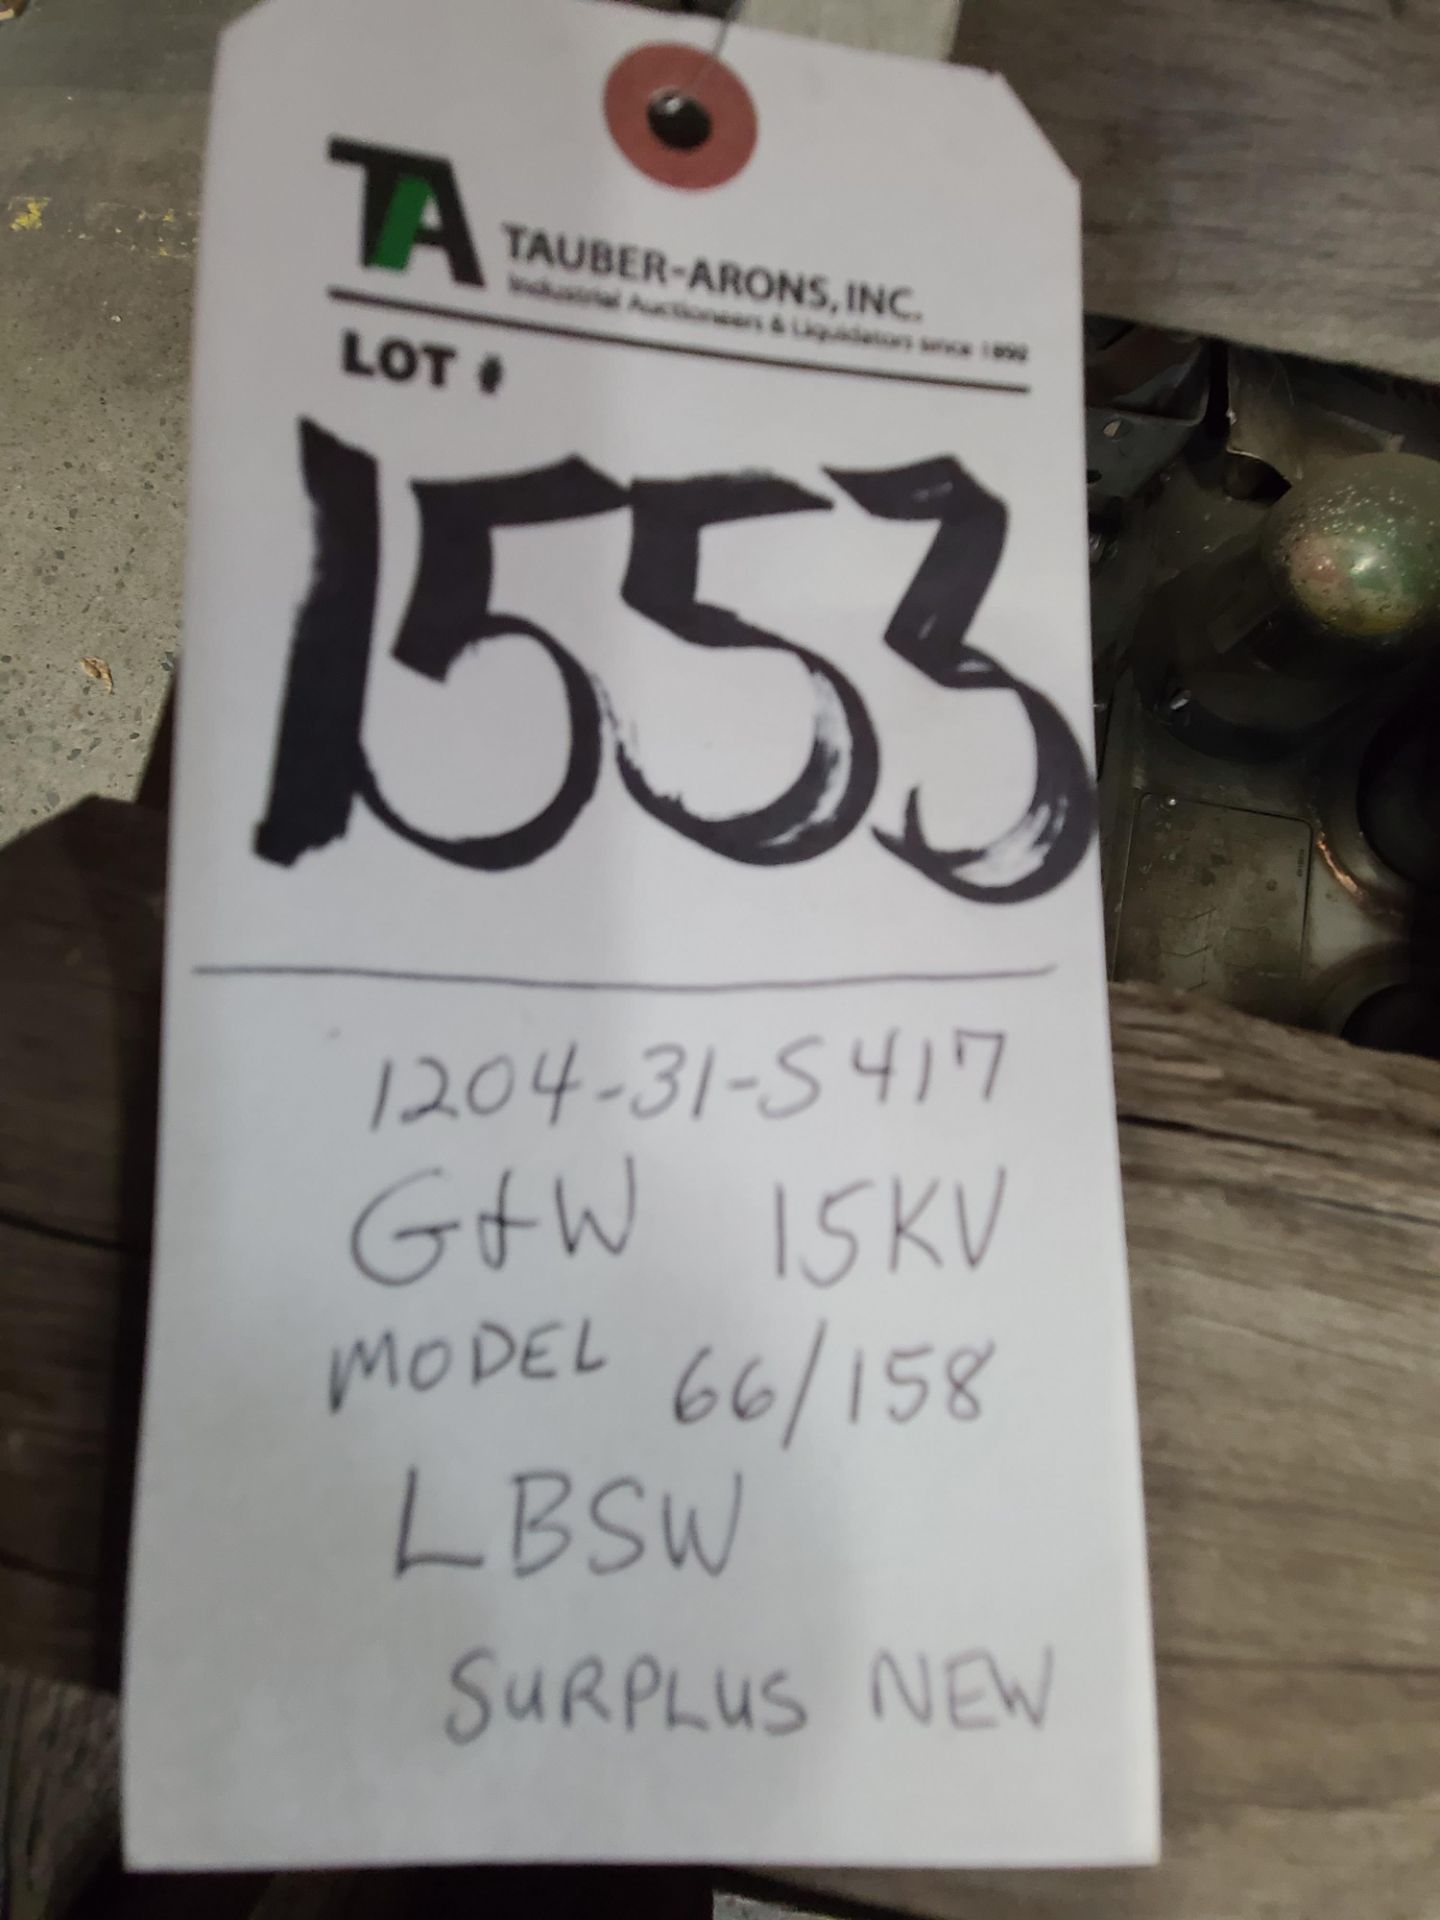 (Lot) G&W 15KV mod. 66/158 LBSW (LOADING FEES: $25) - Image 3 of 3